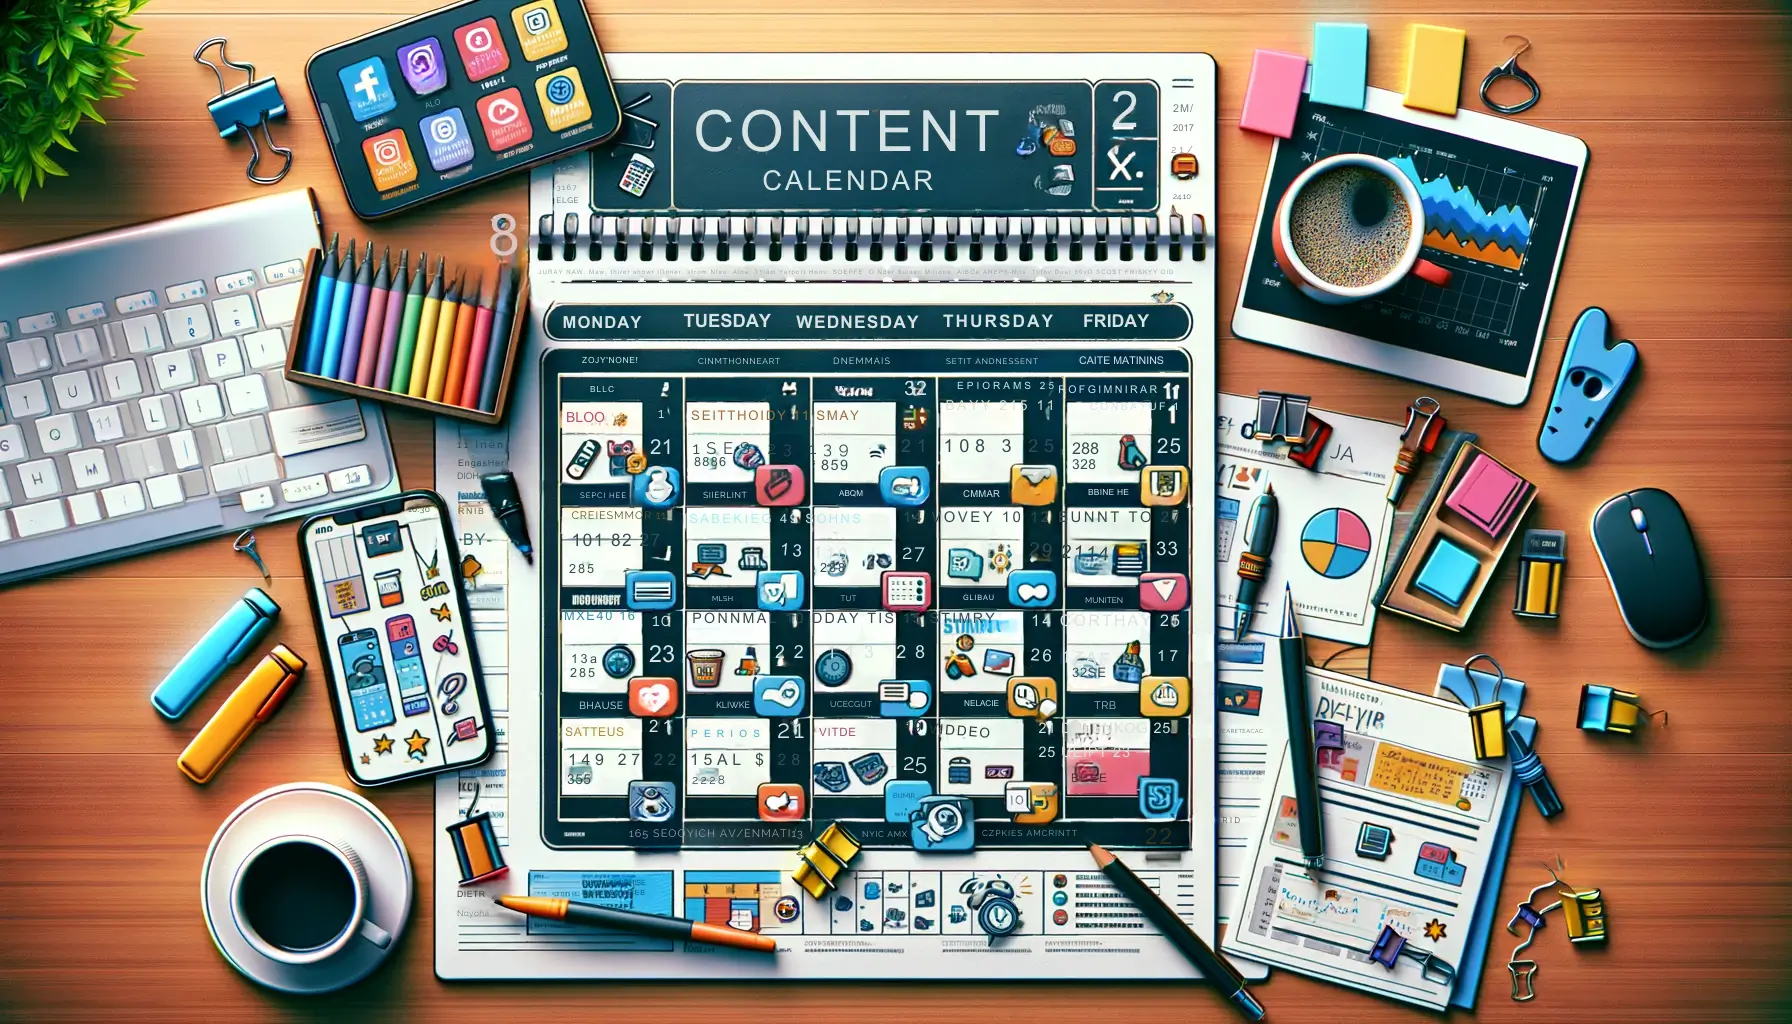 a content calendar template image on a desktop